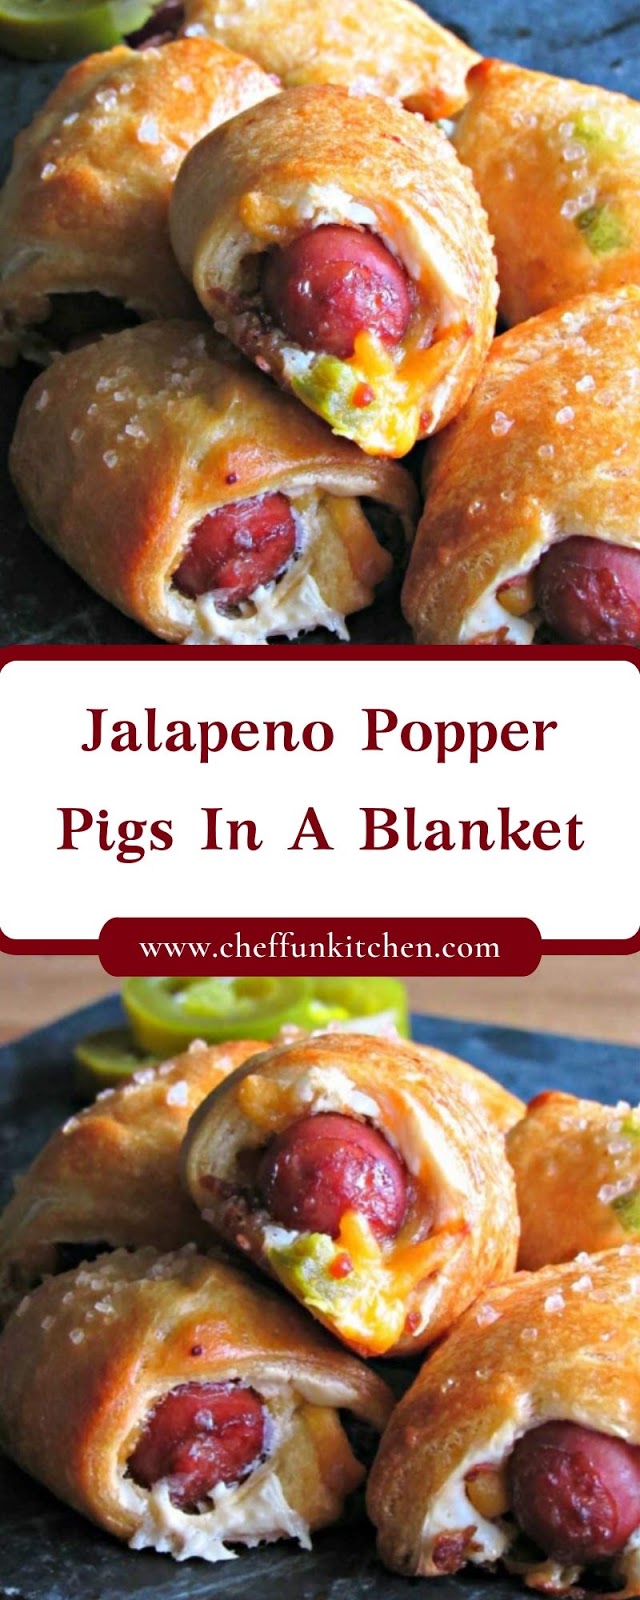 Jalapeno Popper Pigs In A Blanket